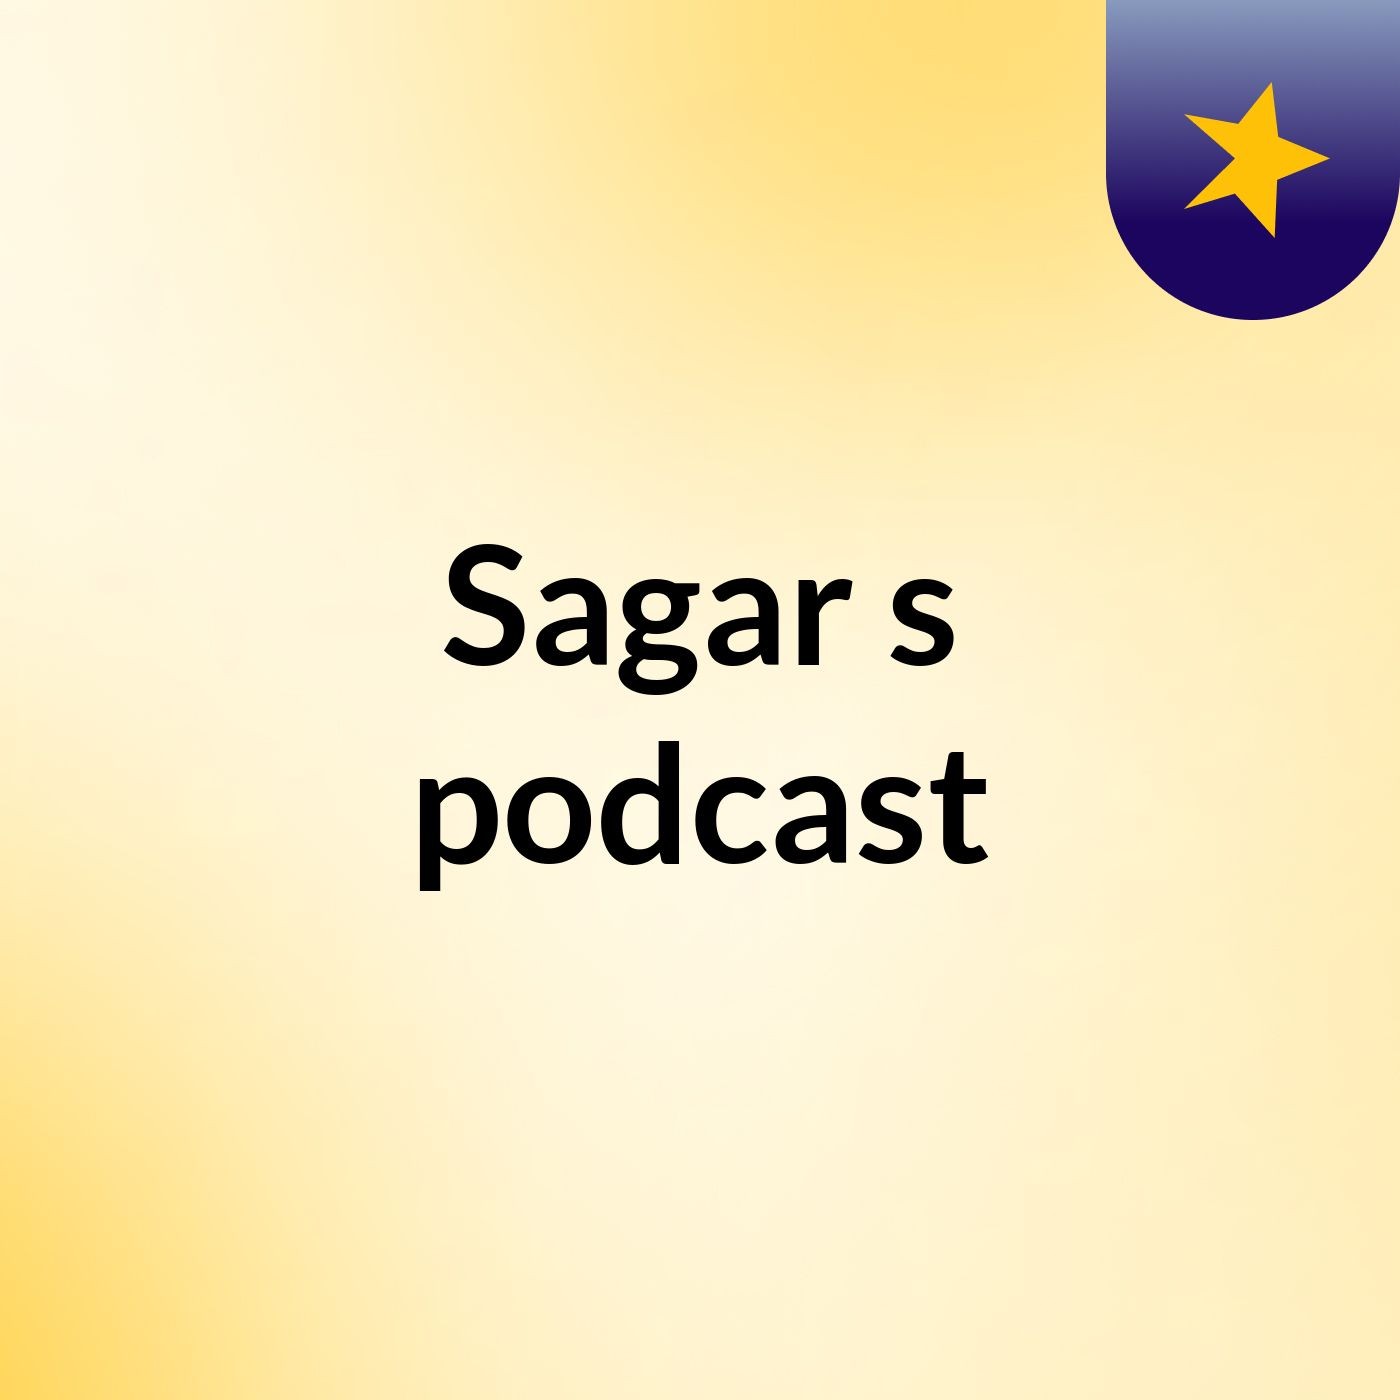 Episode 1 - Sagar's podcast